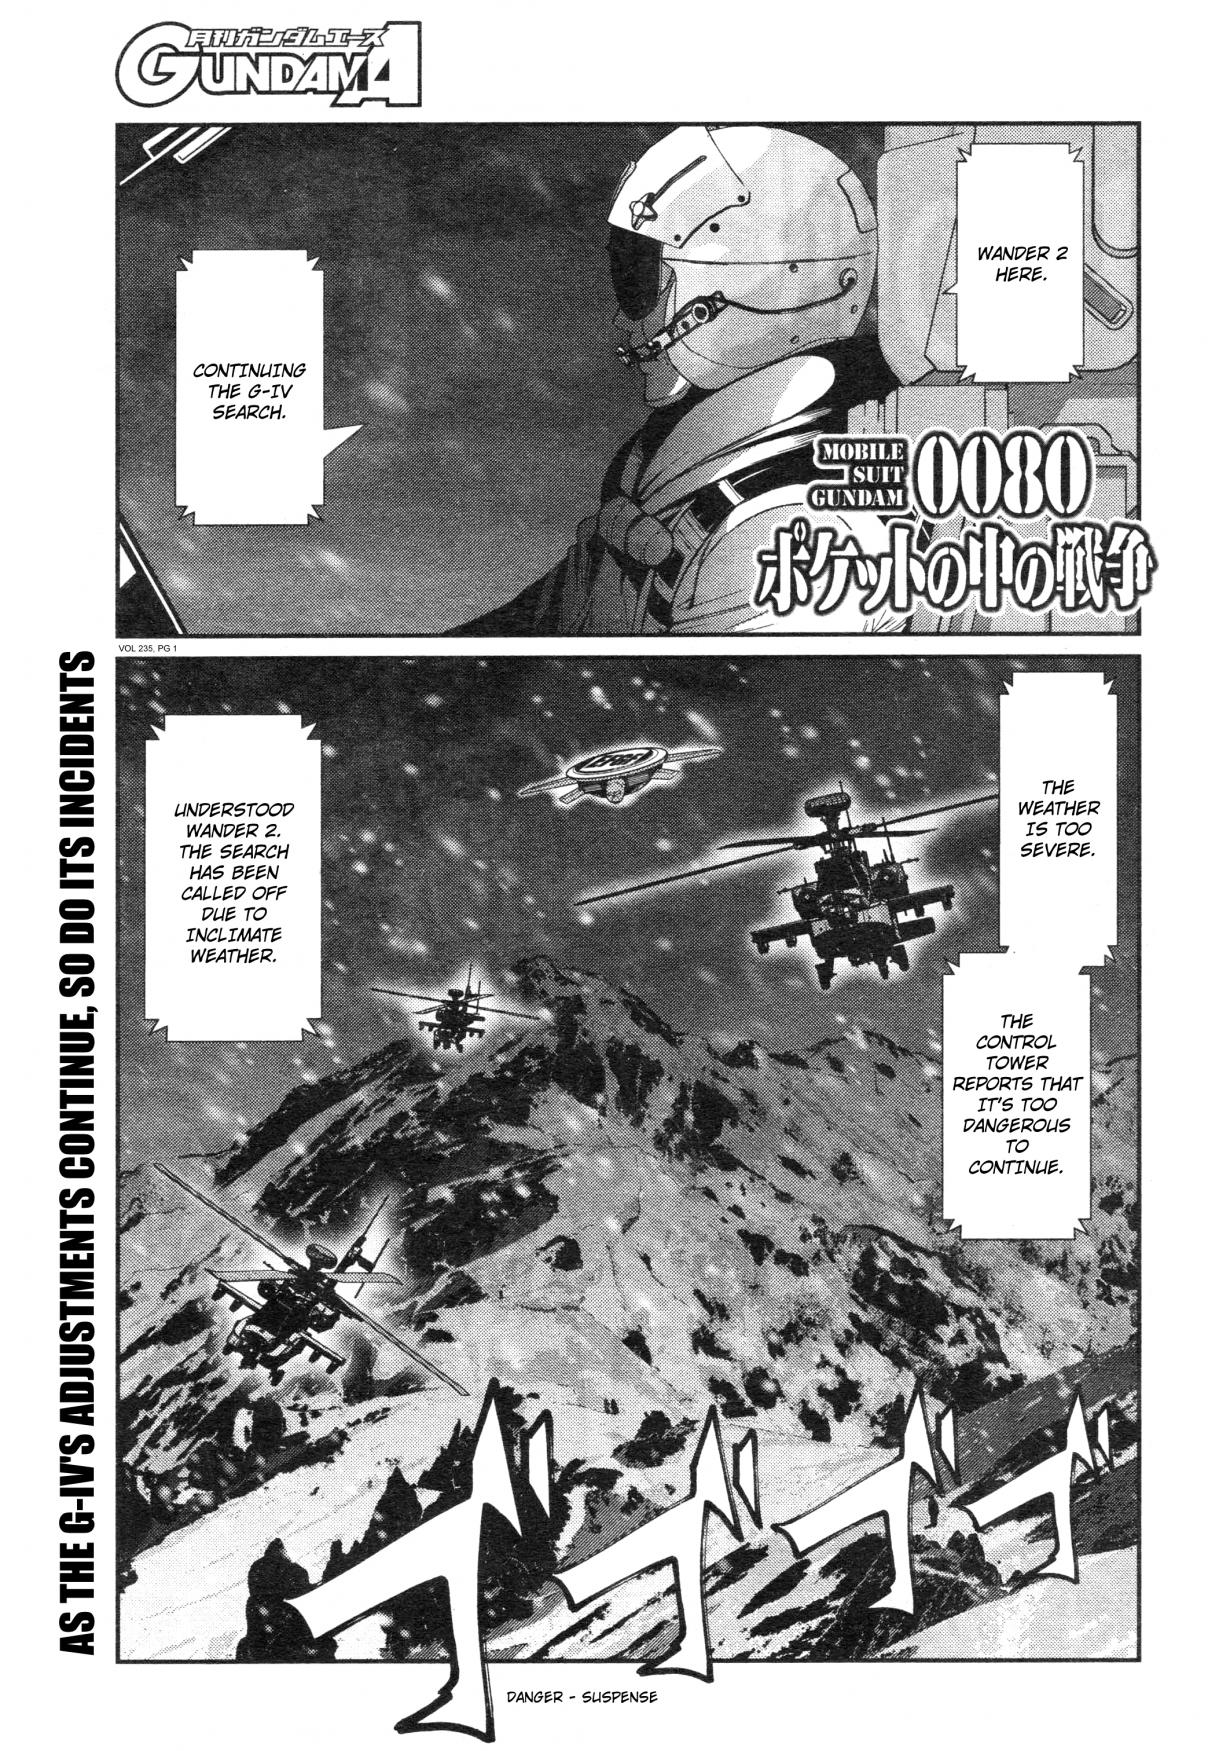 Mobile Suit Gundam 0080 - War in the Pocket 5